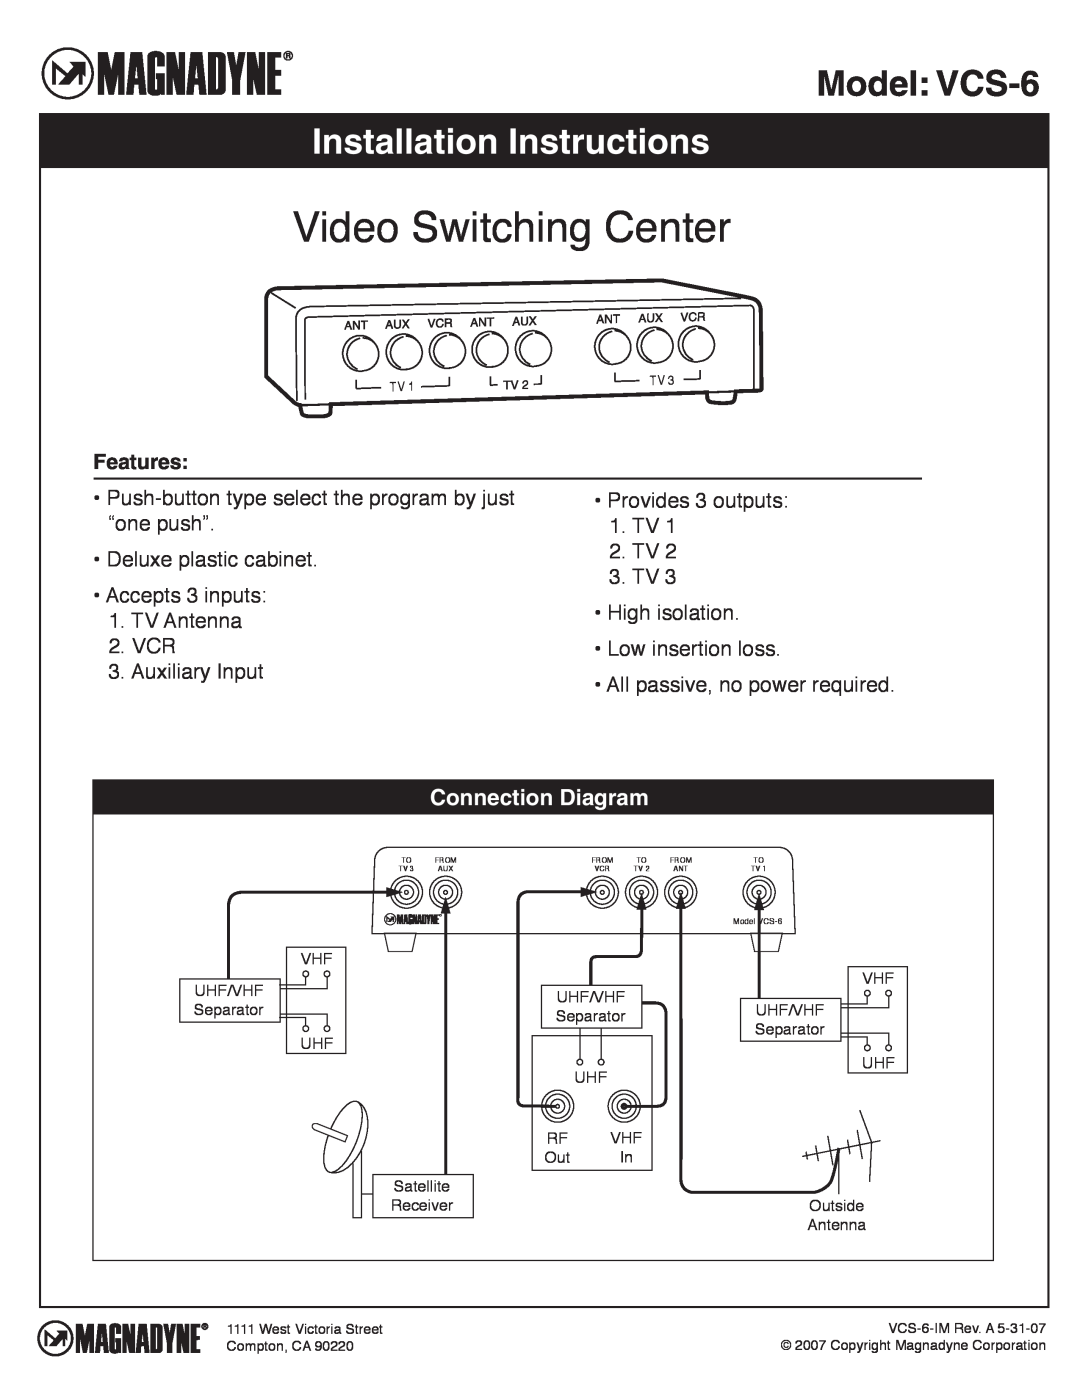 Magnadyne installation instructions Video Switching Center, Model VCS-6, Installation Instructions, Connection Diagram 